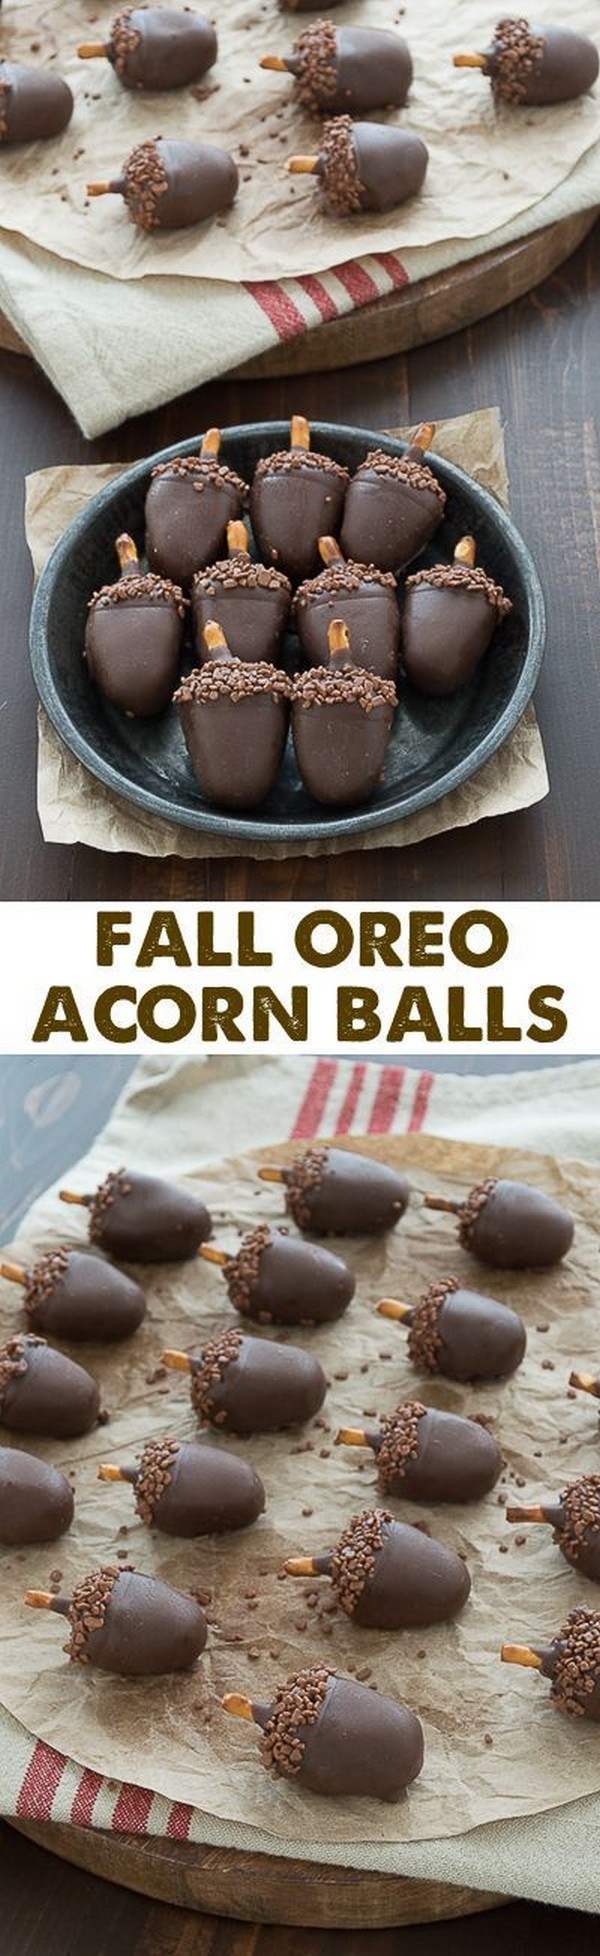 Oreo Acorn Balls